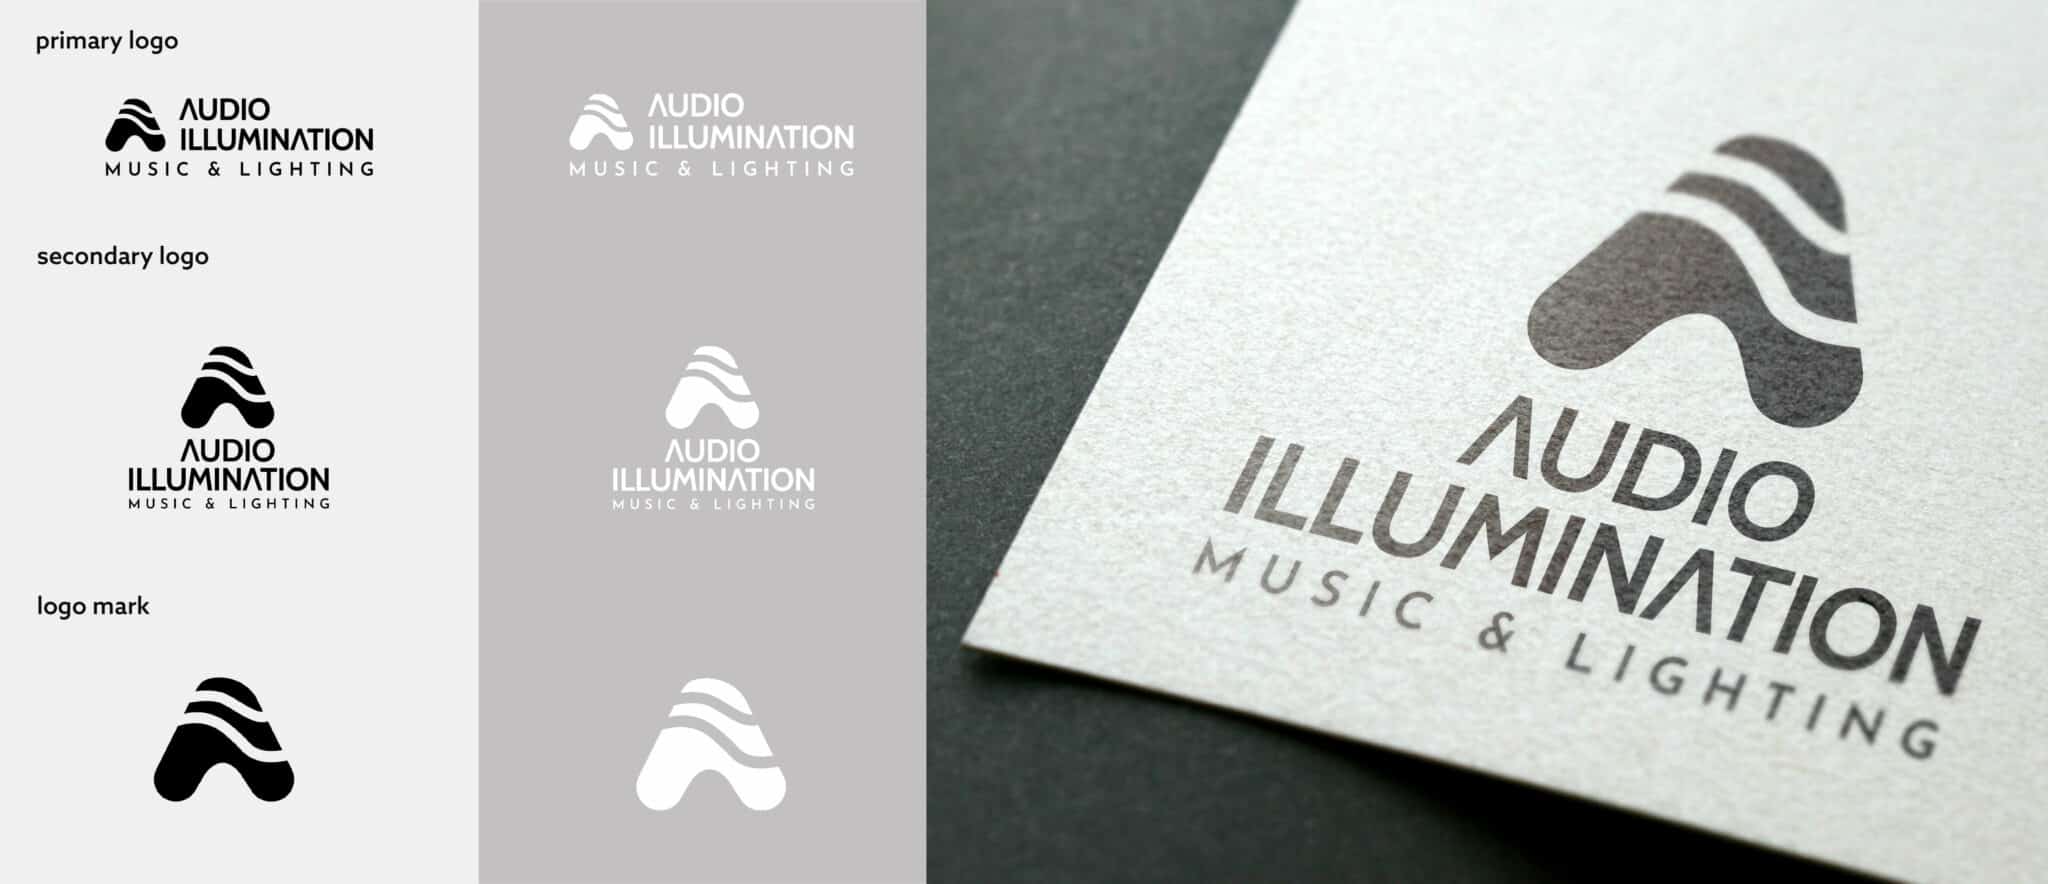 audio illumination business cards